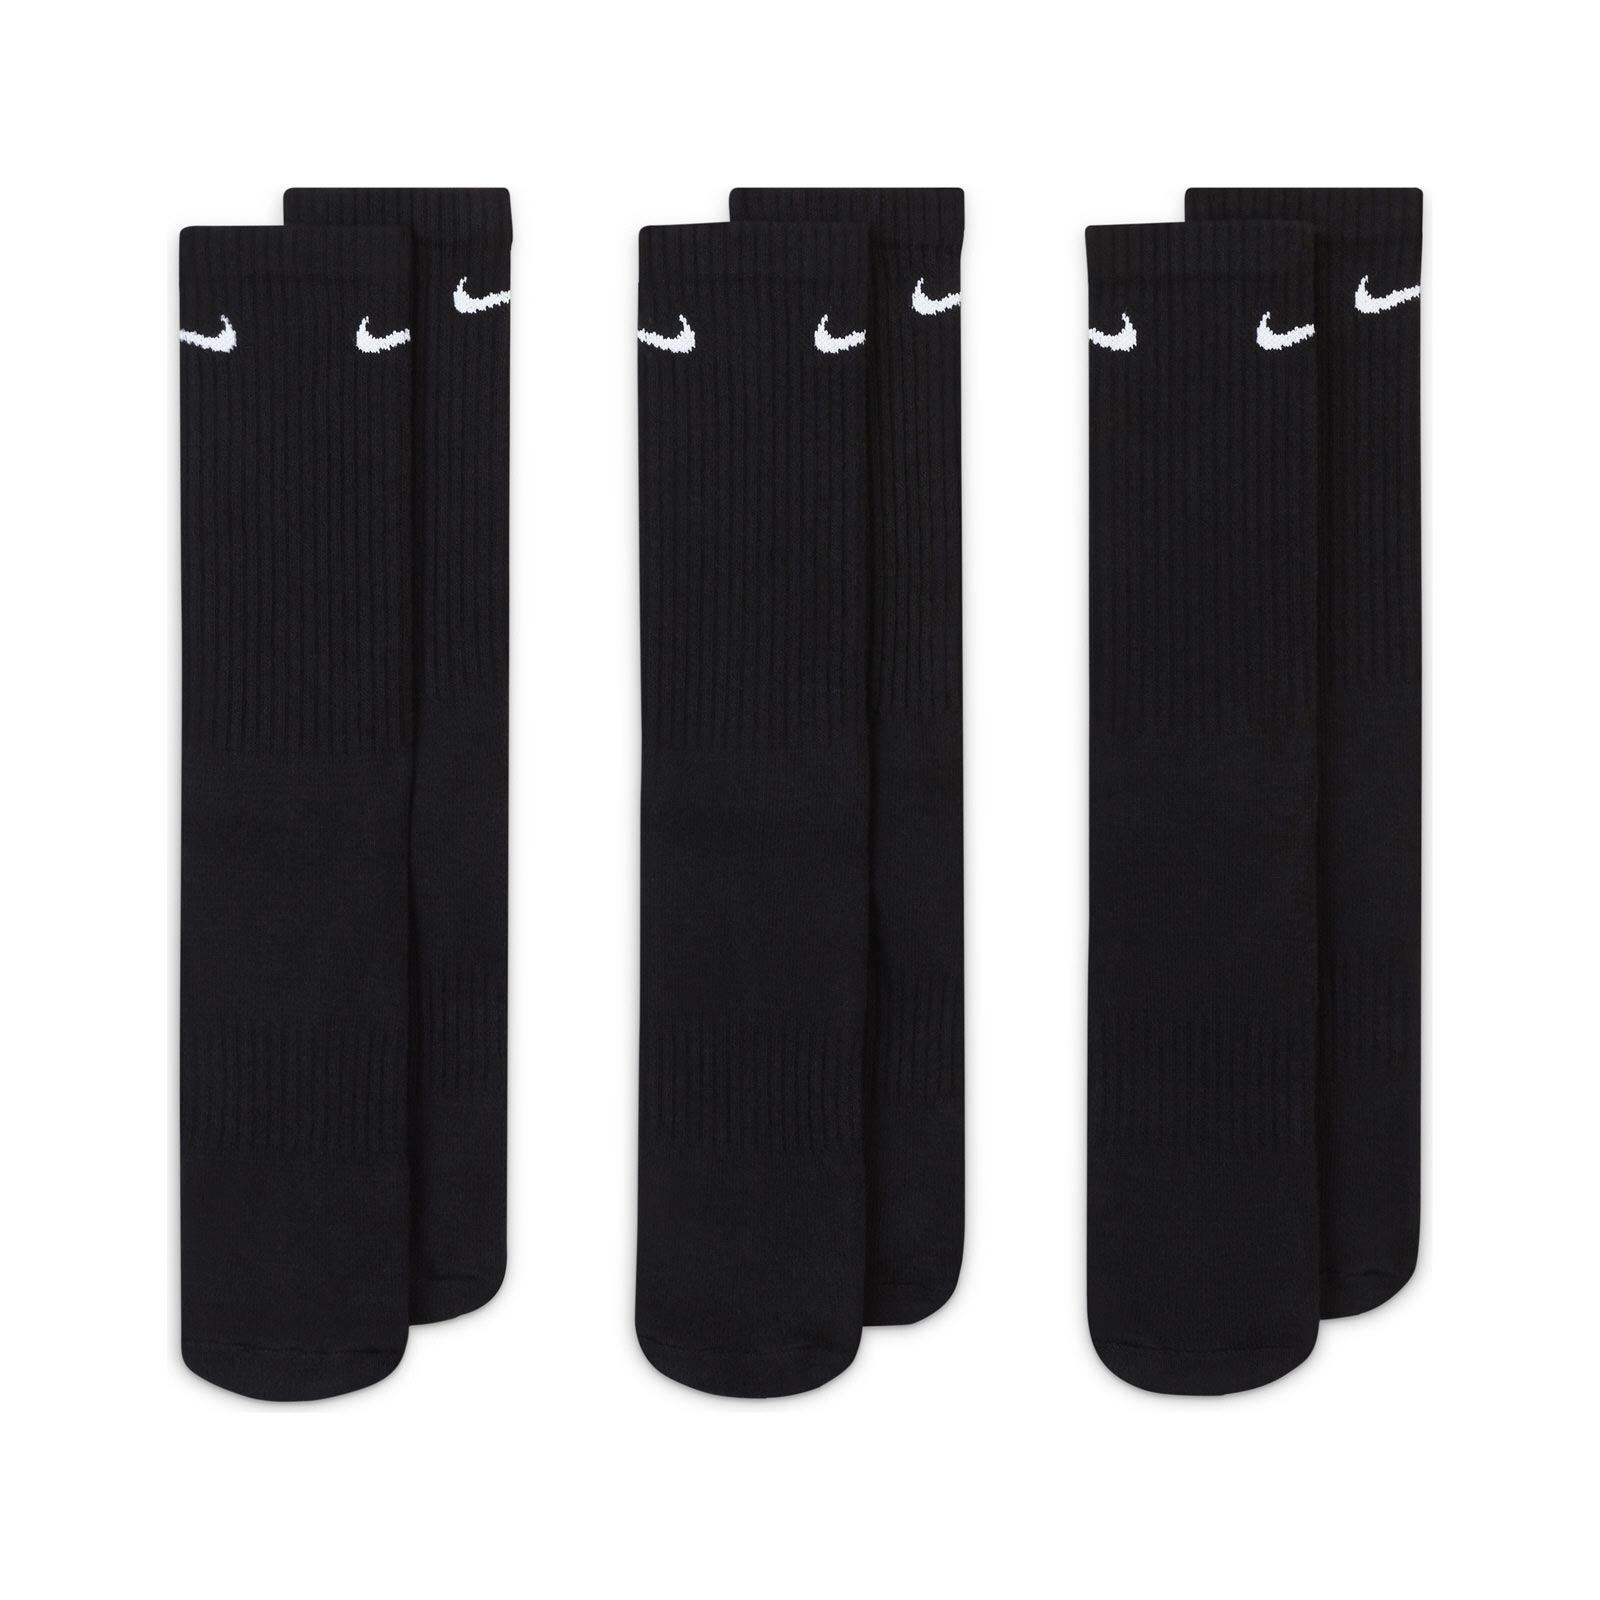 Nike Cushion Crew Sock 3Pack, Large, BLK